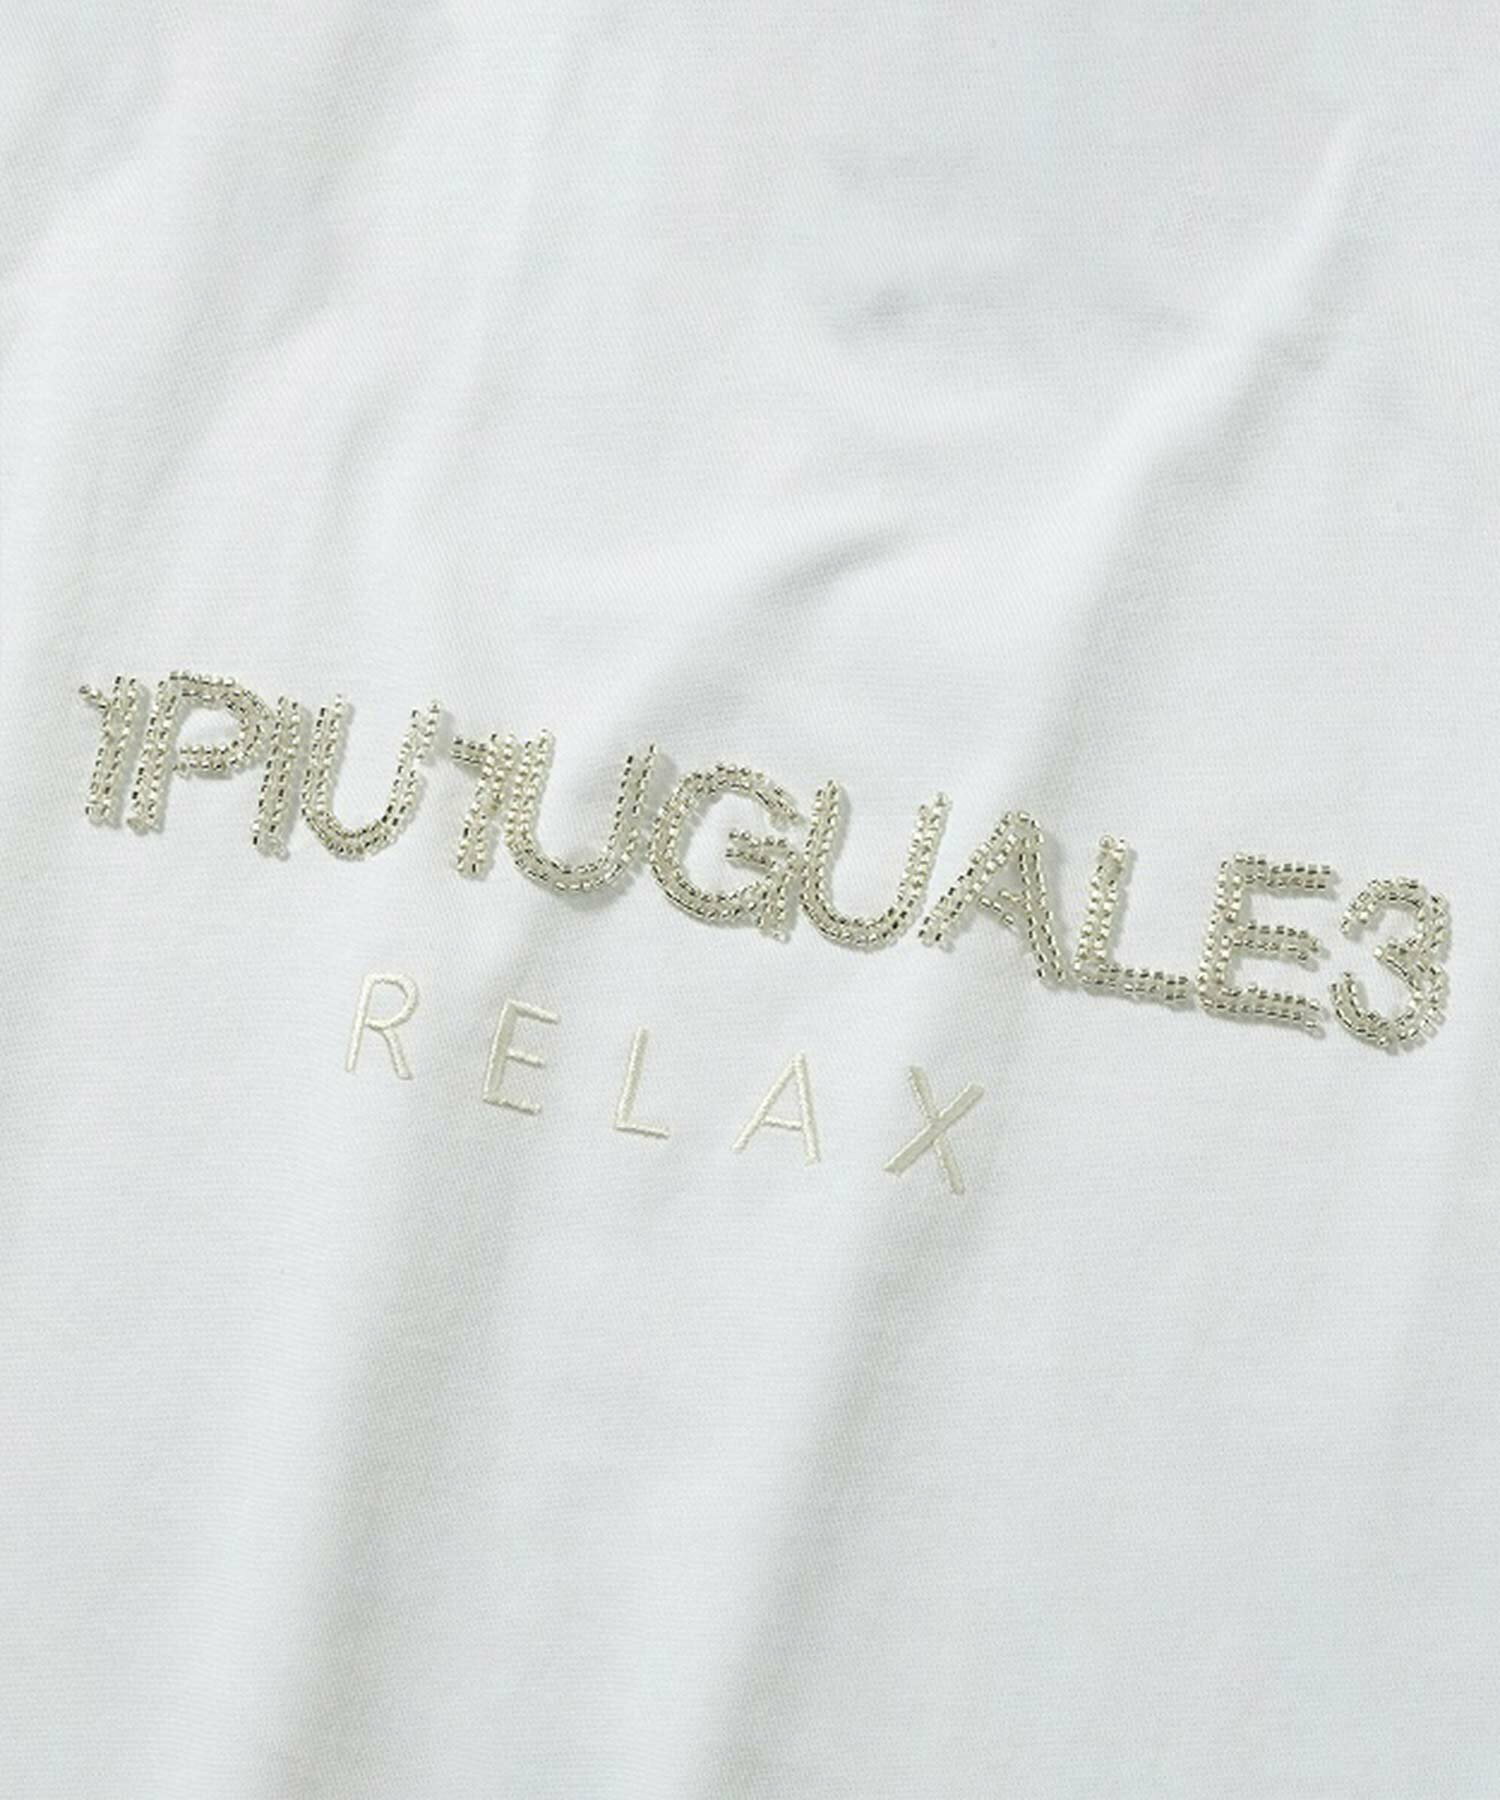 (M)1PIU1UGUALE3 RELAX/UST-24008 ビーズロゴ半袖Tシャツ